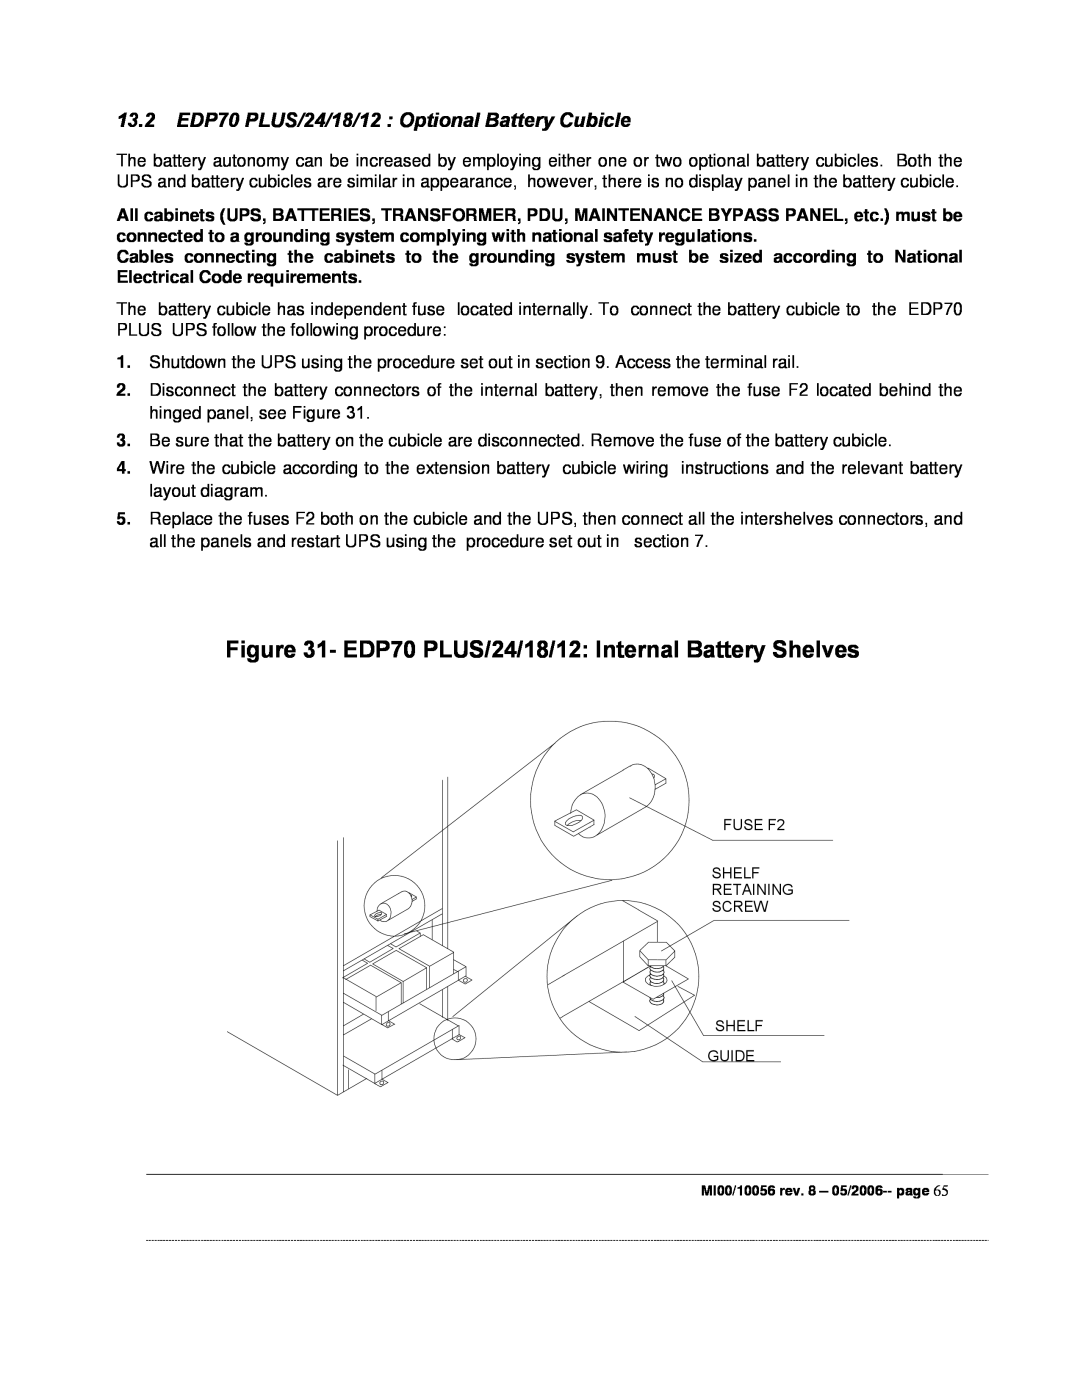 Garmin manual EDP70 PLUS/24/18/12 Internal Battery Shelves, 13.2 EDP70 PLUS/24/18/12 Optional Battery Cubicle 